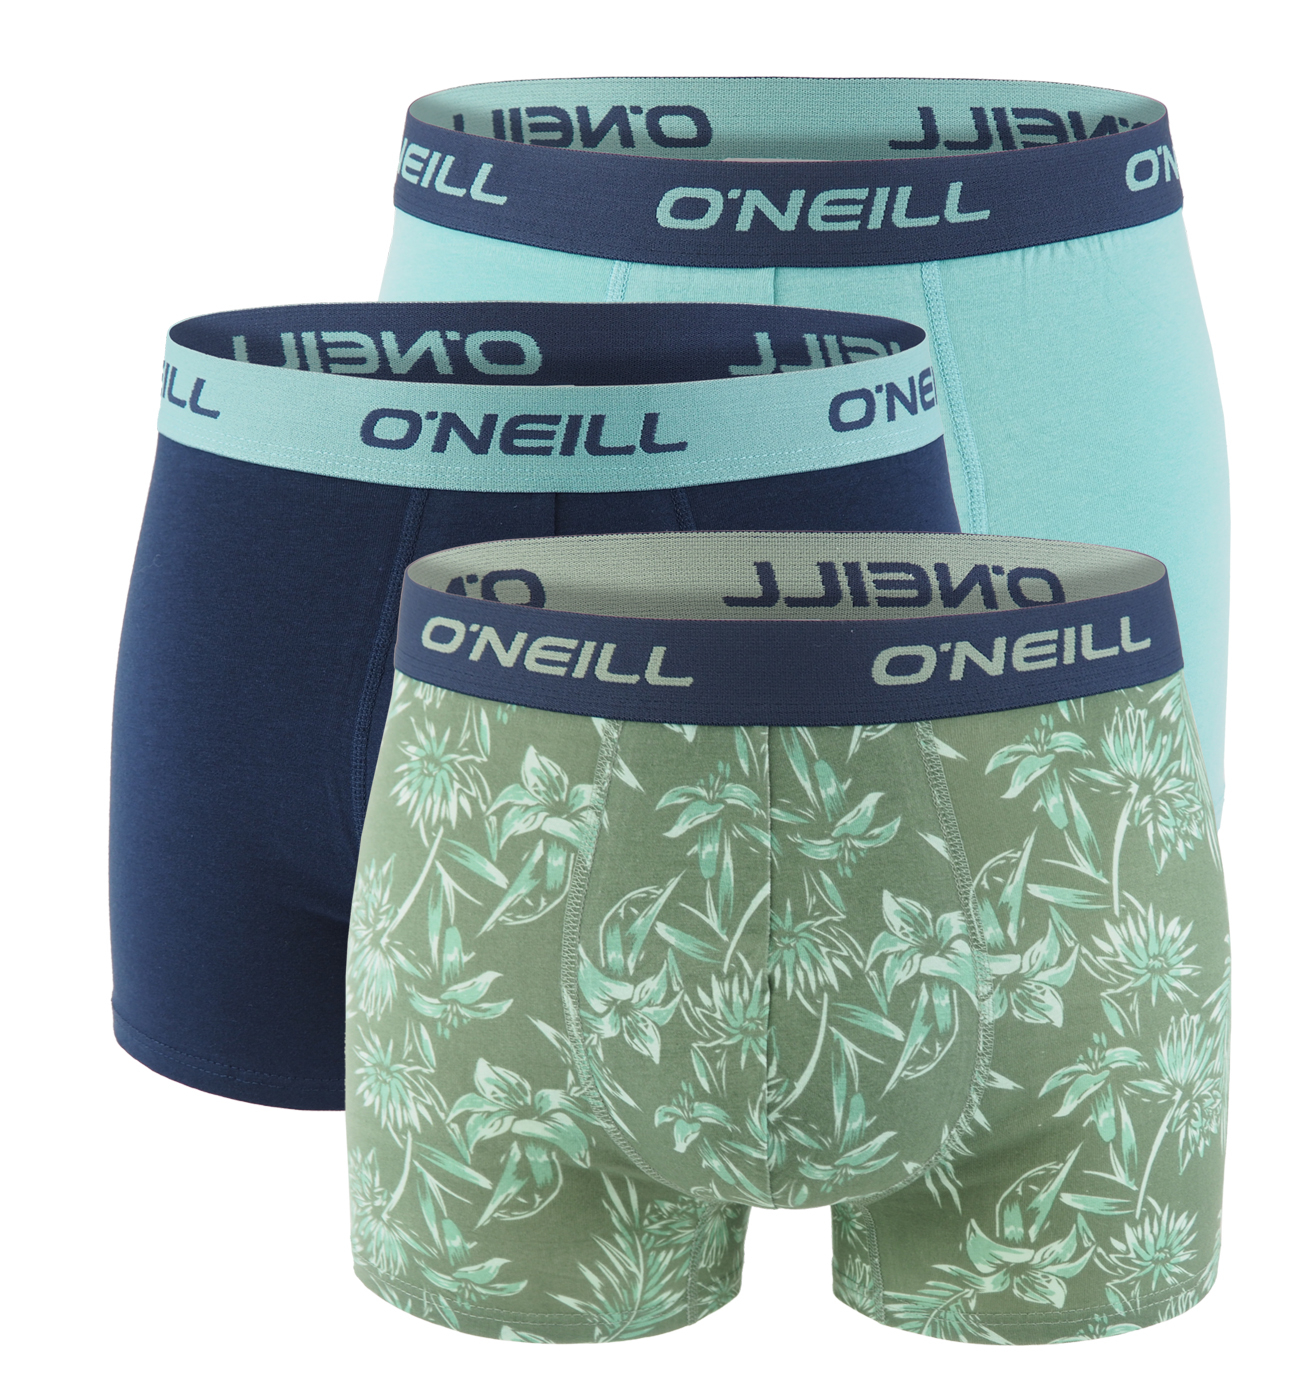 O'NEILL - boxerky 3PACK marine & green flower color combo - limitovana edicia